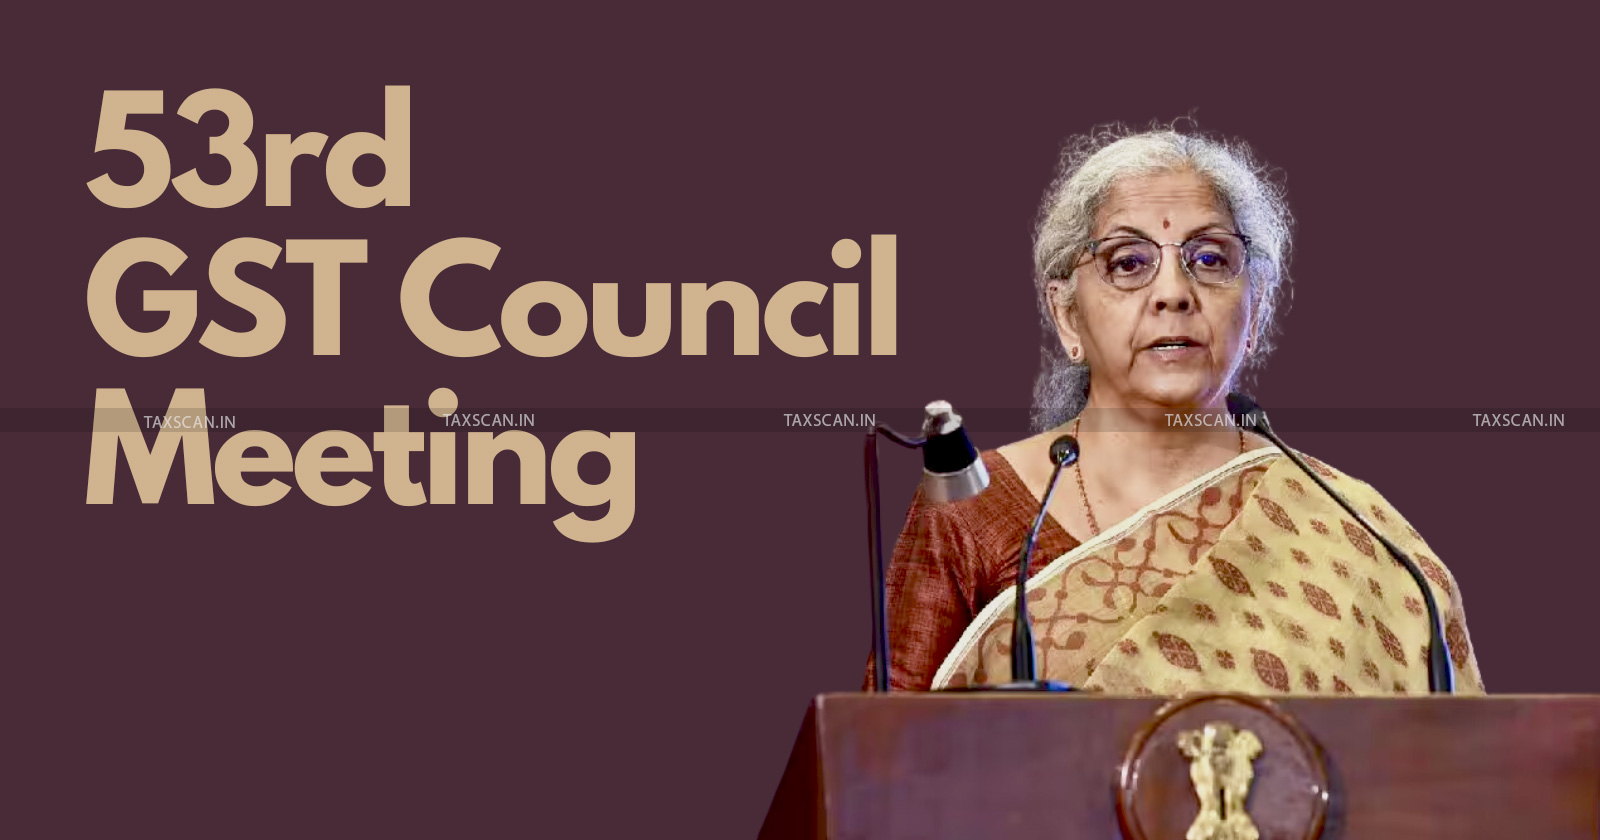 GST Council Meeting - GST Council Meeting Updates - GST Council Updates - GST Council - GST - taxscan